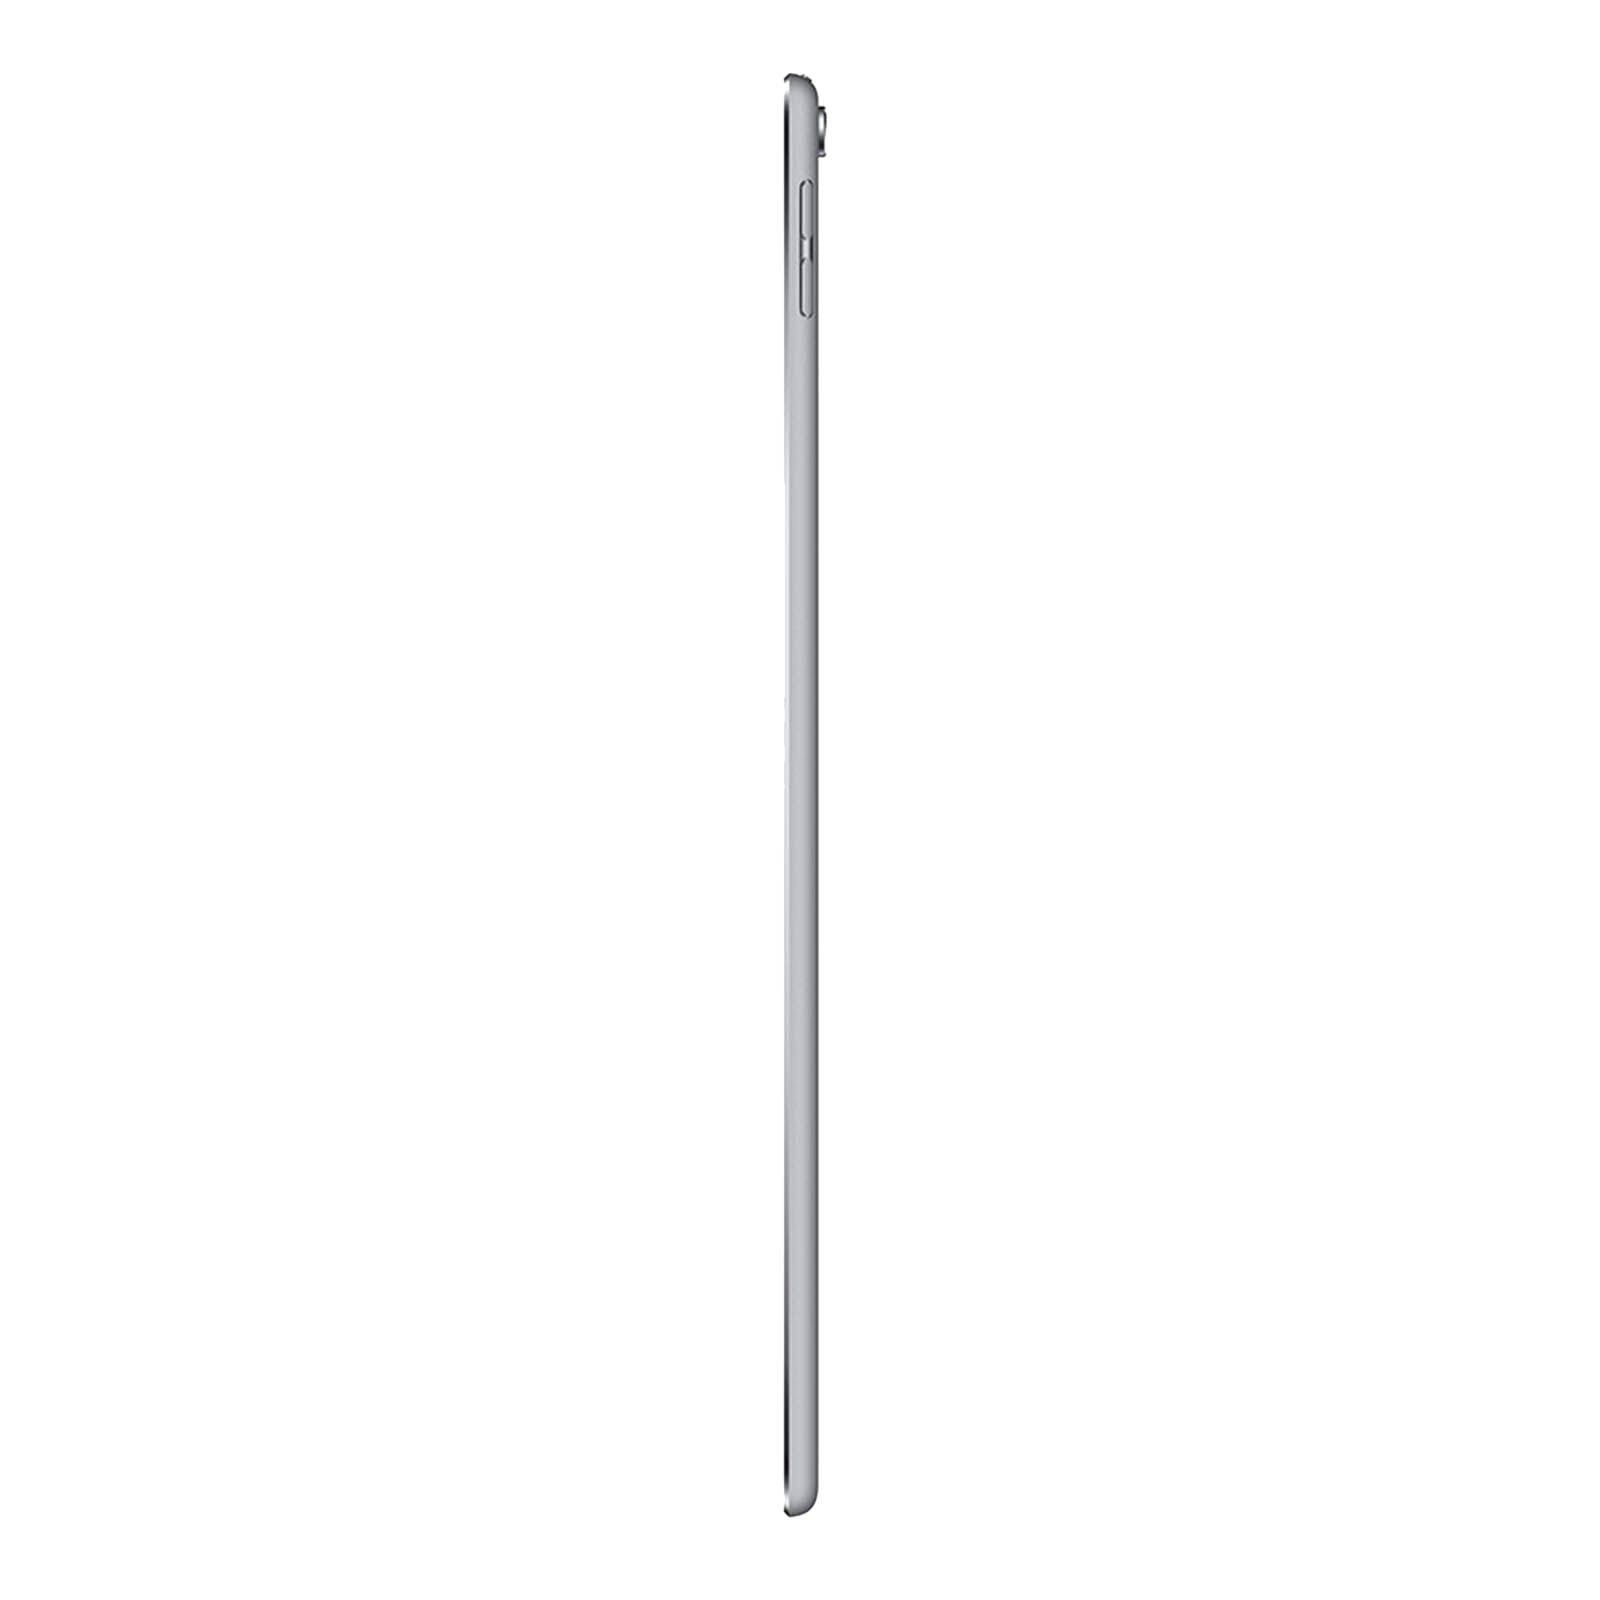 Apple iPad Pro 10.5" 512GB Space Grey - Unlocked